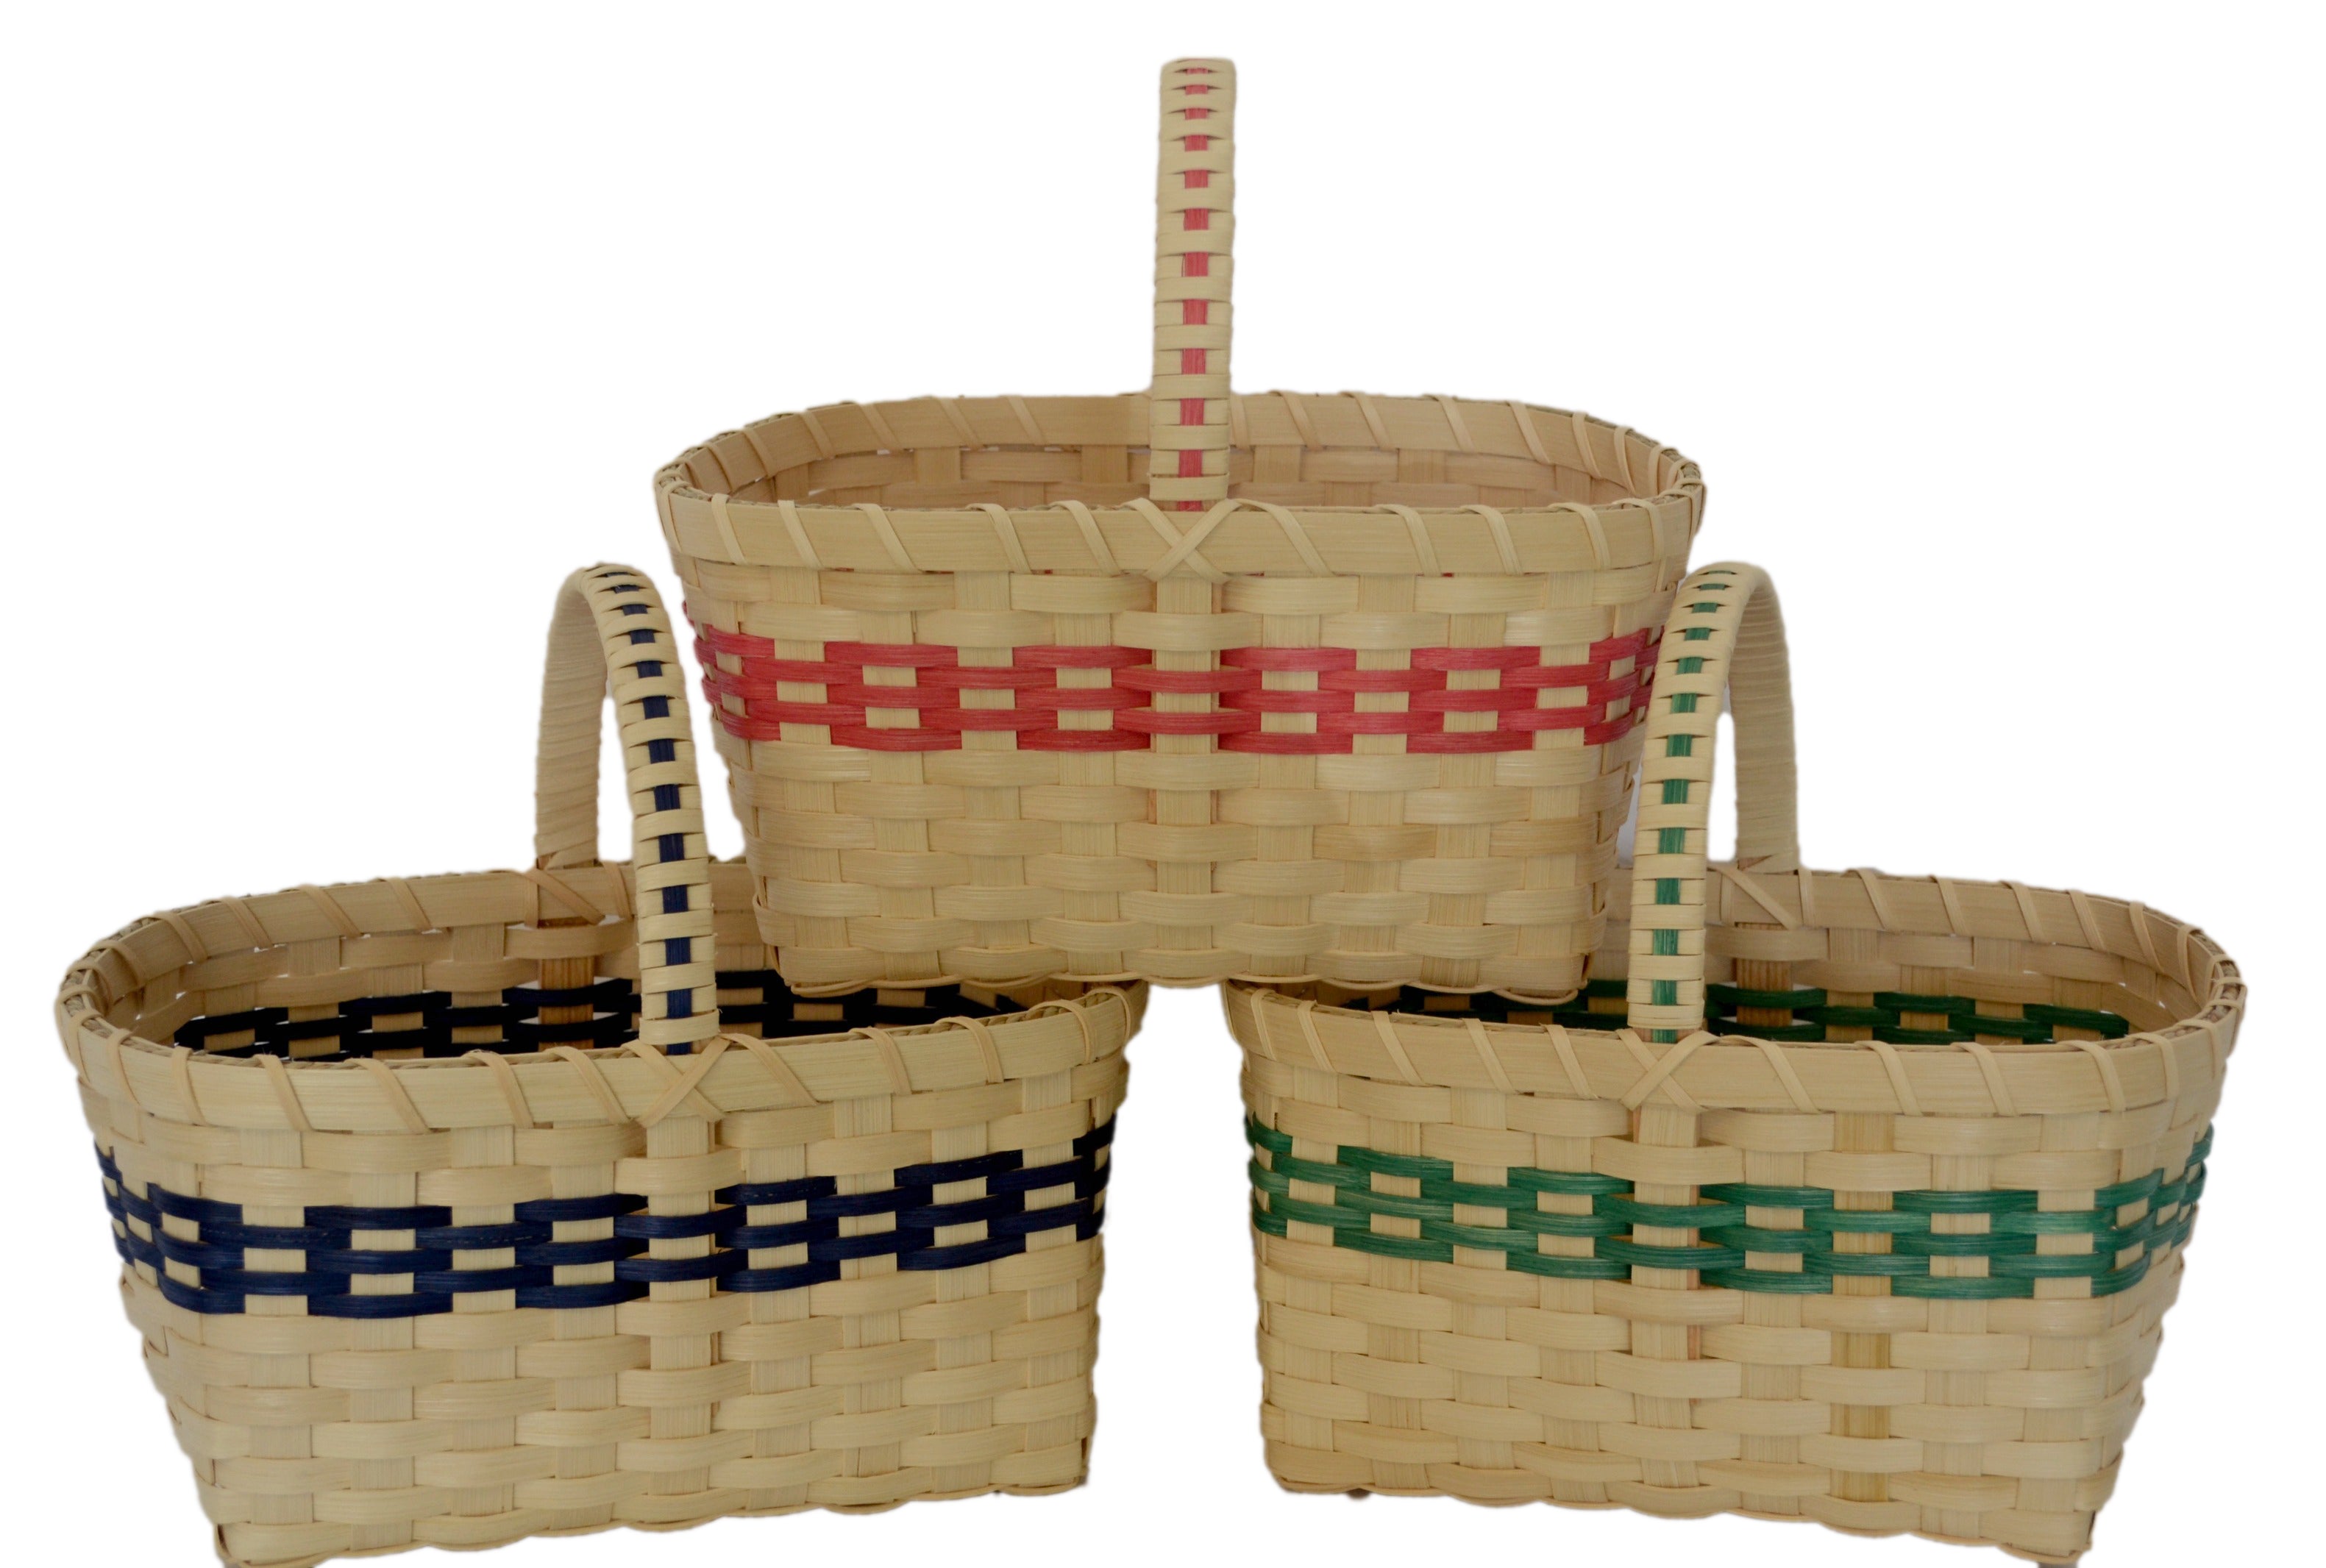 Mini basket Weaving Kit For Beginners, Weaving, Supplies, Reed, Pattern